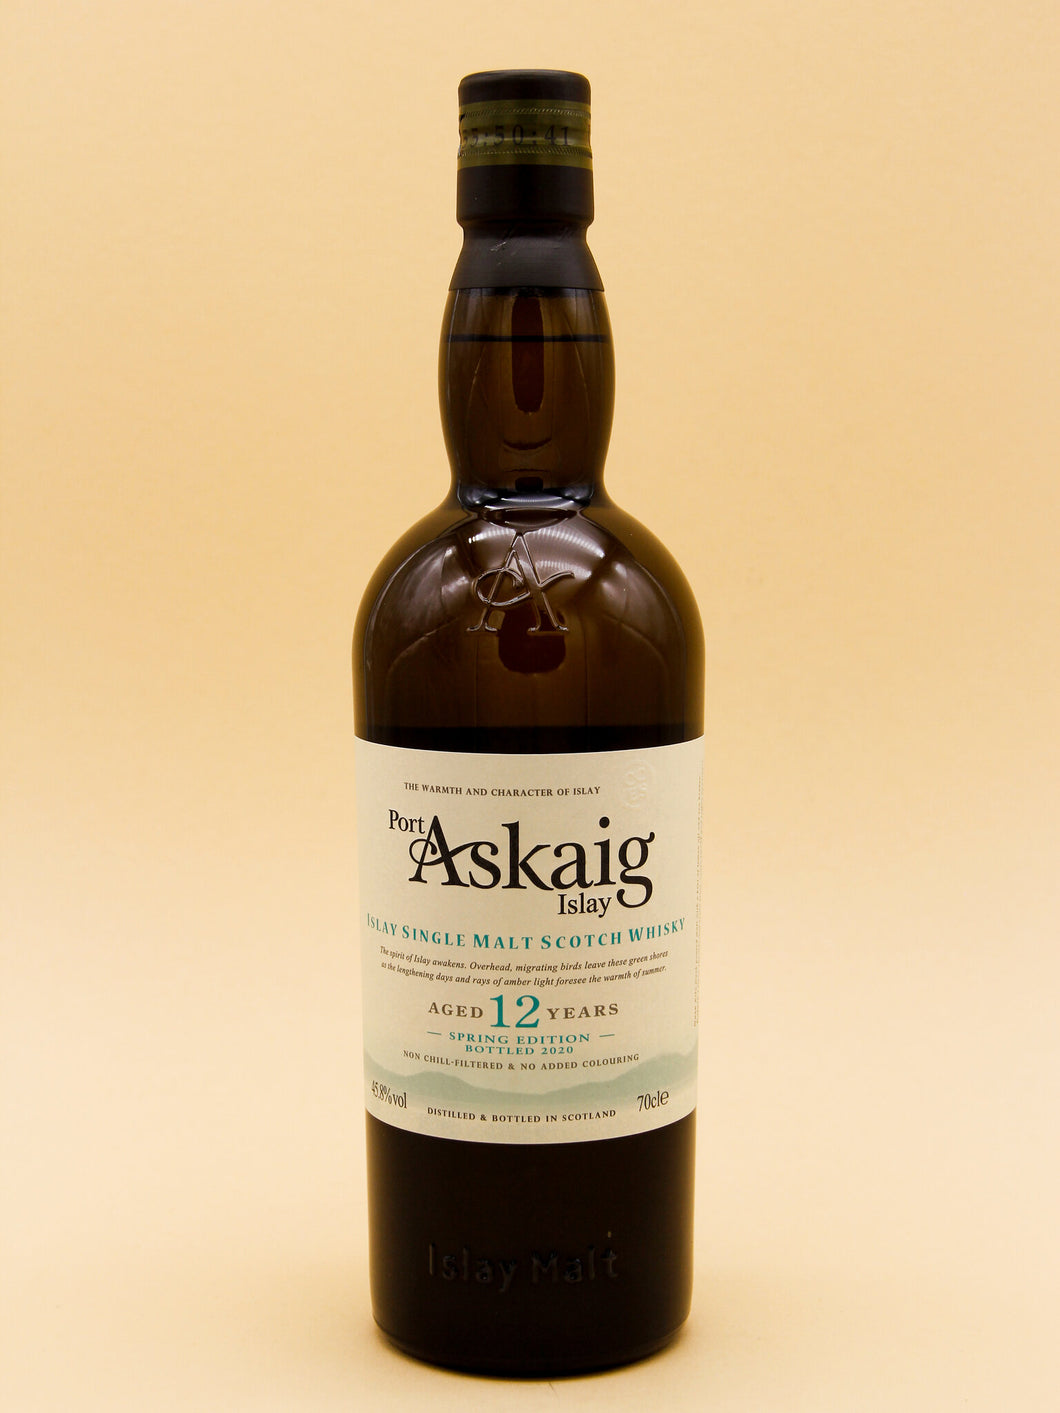 Port Askaig 12 Year Old, Spring Edition, Islay Single Malt Scotch Whisky (45,8%, 70cl)